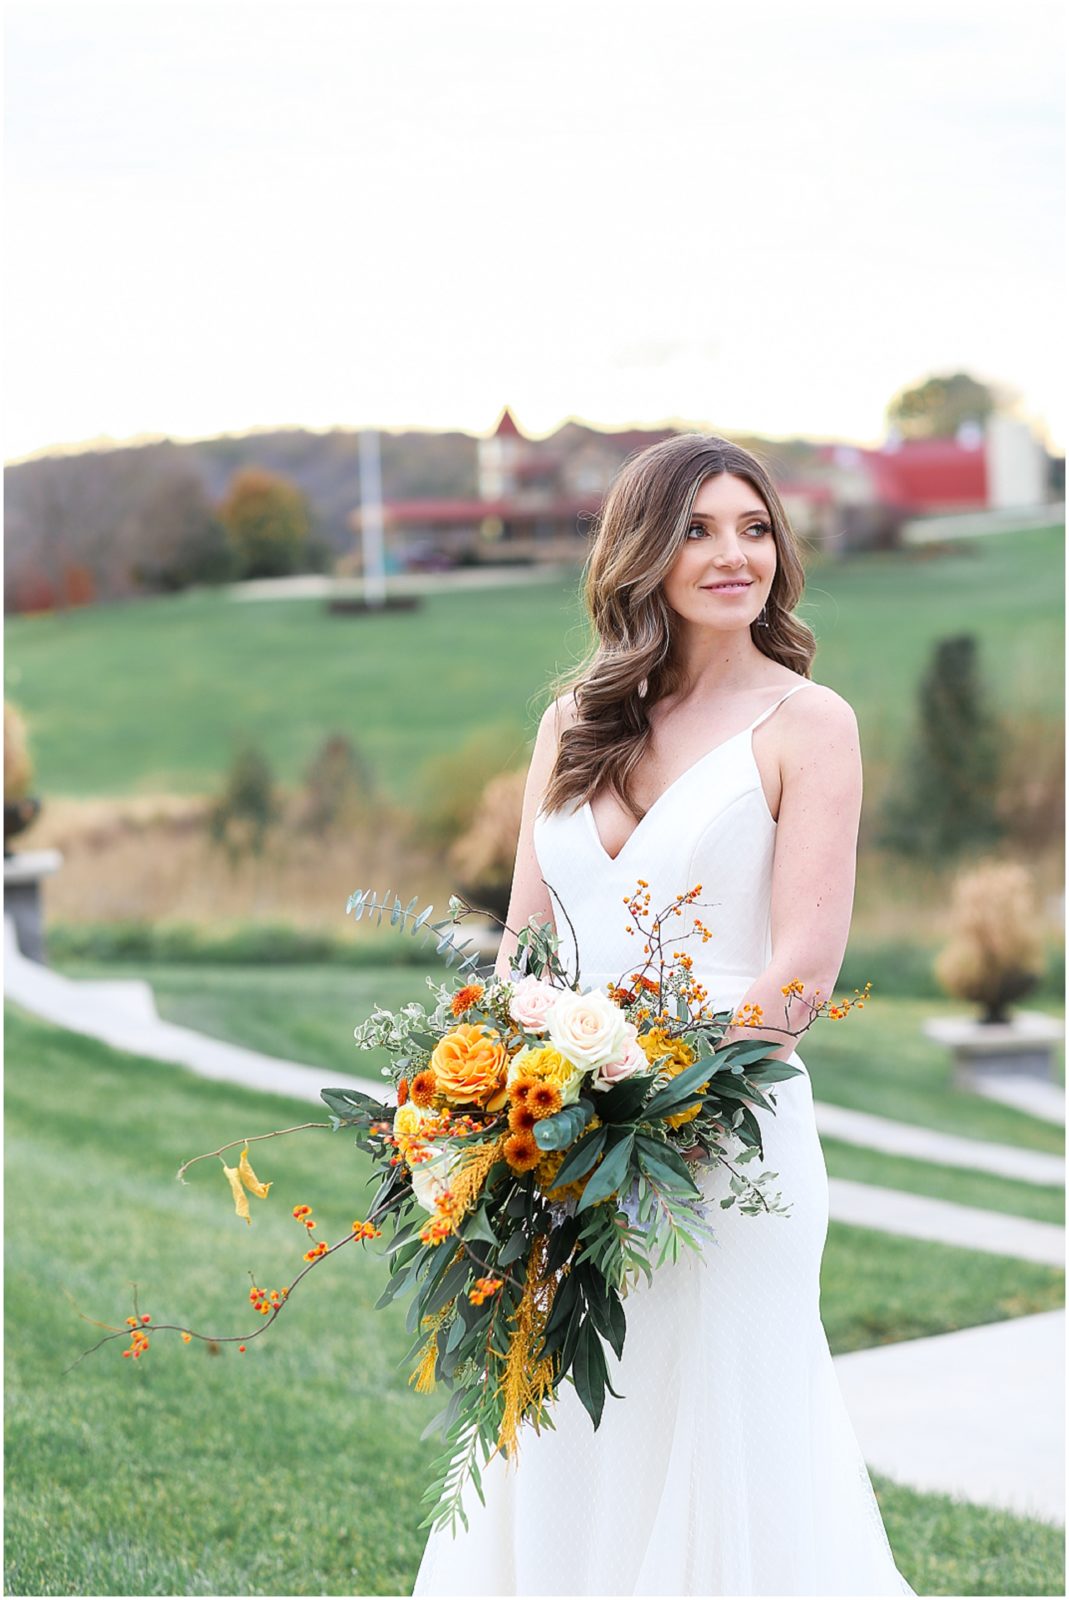 WHITE CARPET BRIDE - BRIDAL MAKEUP - BRIDAL HAIR - PRETTY WEDDING FLOWERS - FALL THEME WEDDING DECOR - MARIAM SAIFAN PHOTOGRAPHY